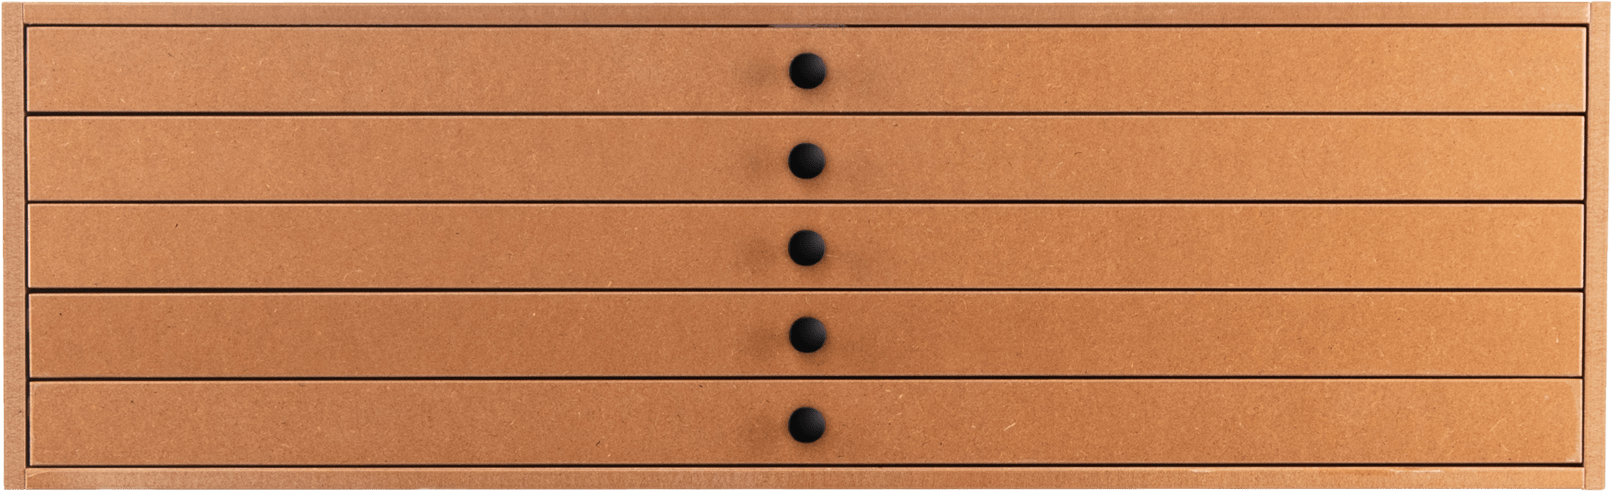 KimDesk Bureau d'étude rangement 4 tiroirs design moderne bois